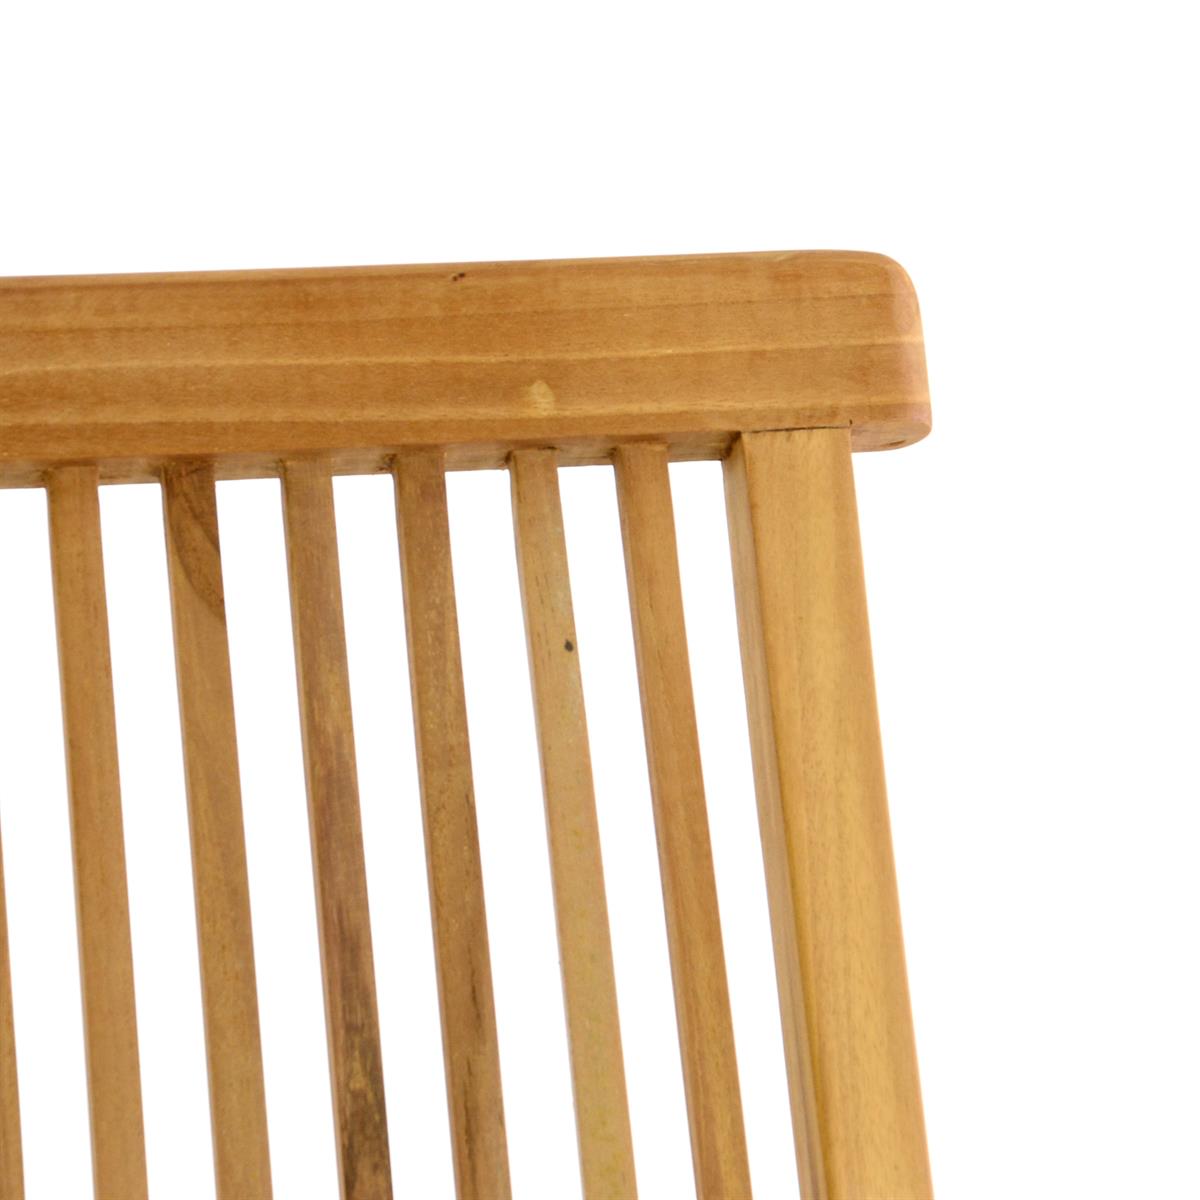 DIVERO Gartenstuhl mit Armlehne Stuhl Teak Holz klappbar massiv behandelt